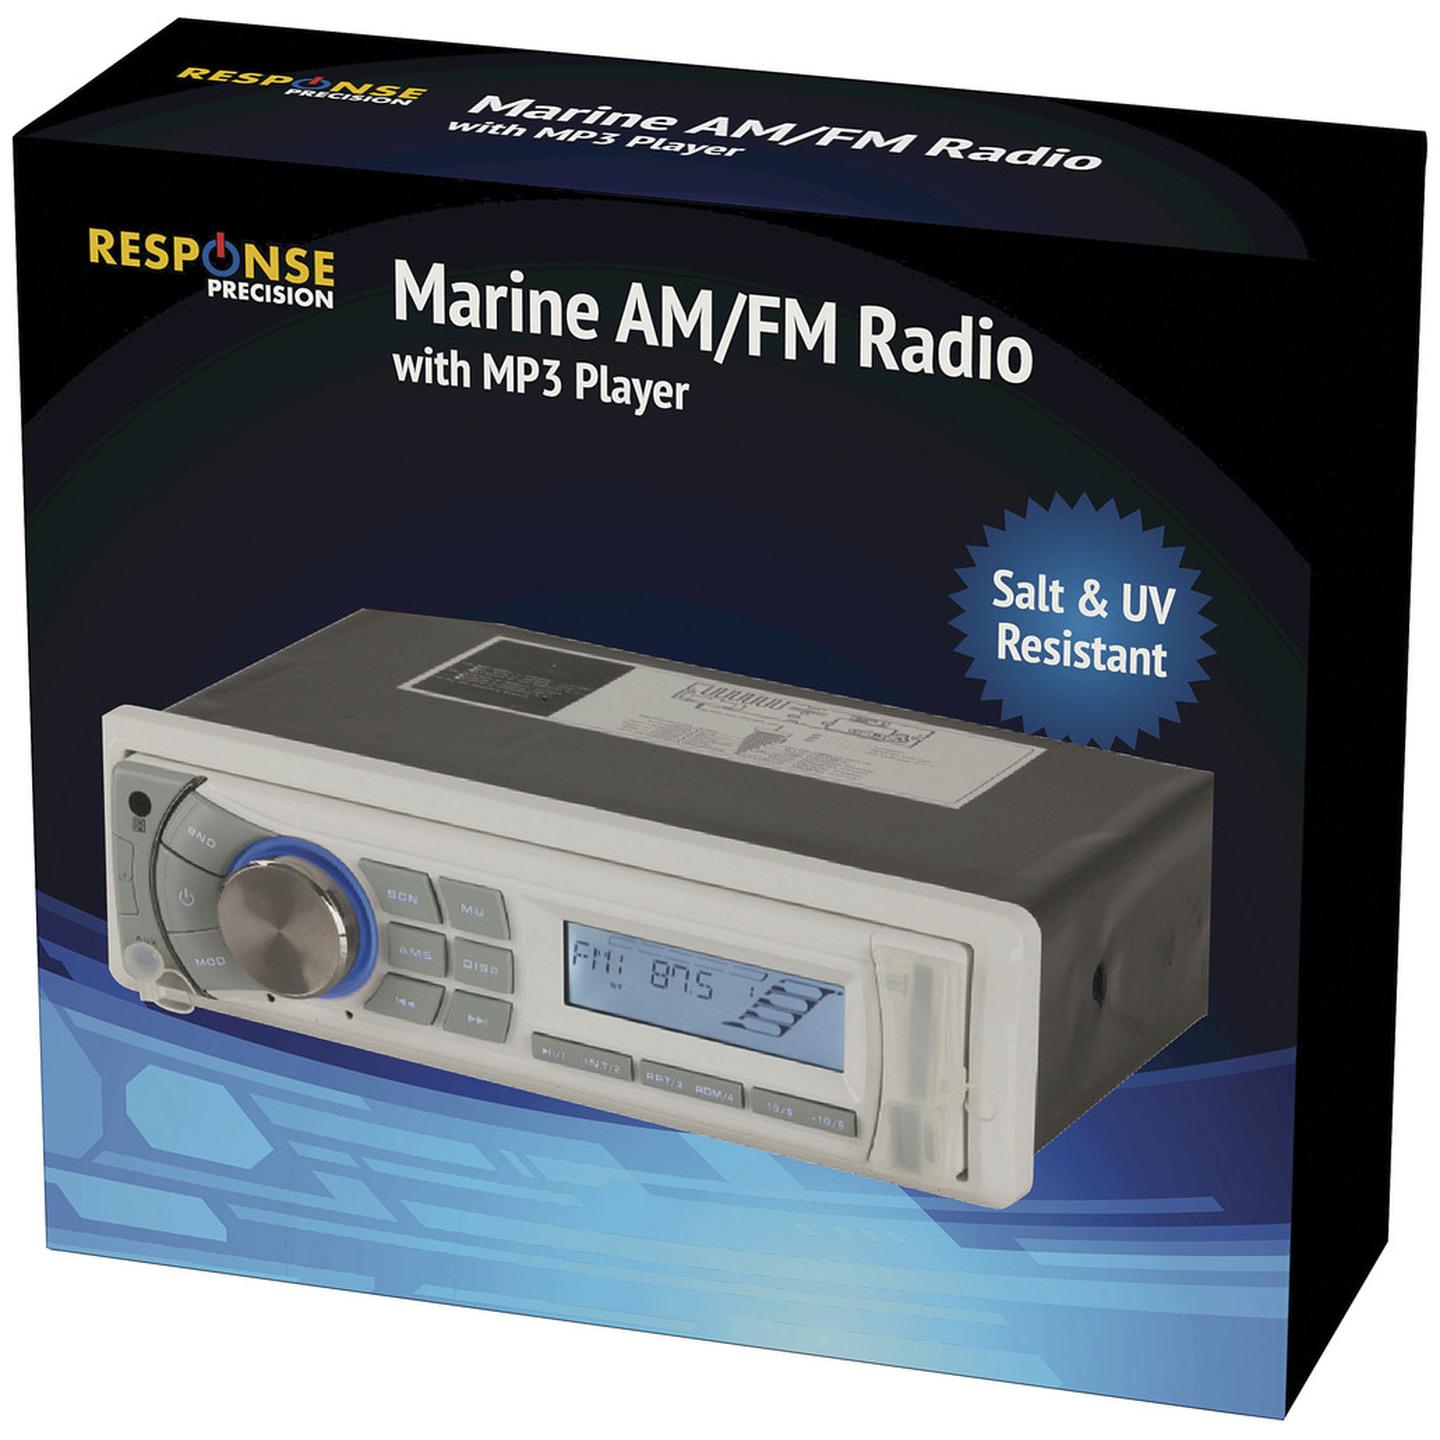 Marine AM/FM Radio with MP3 Player